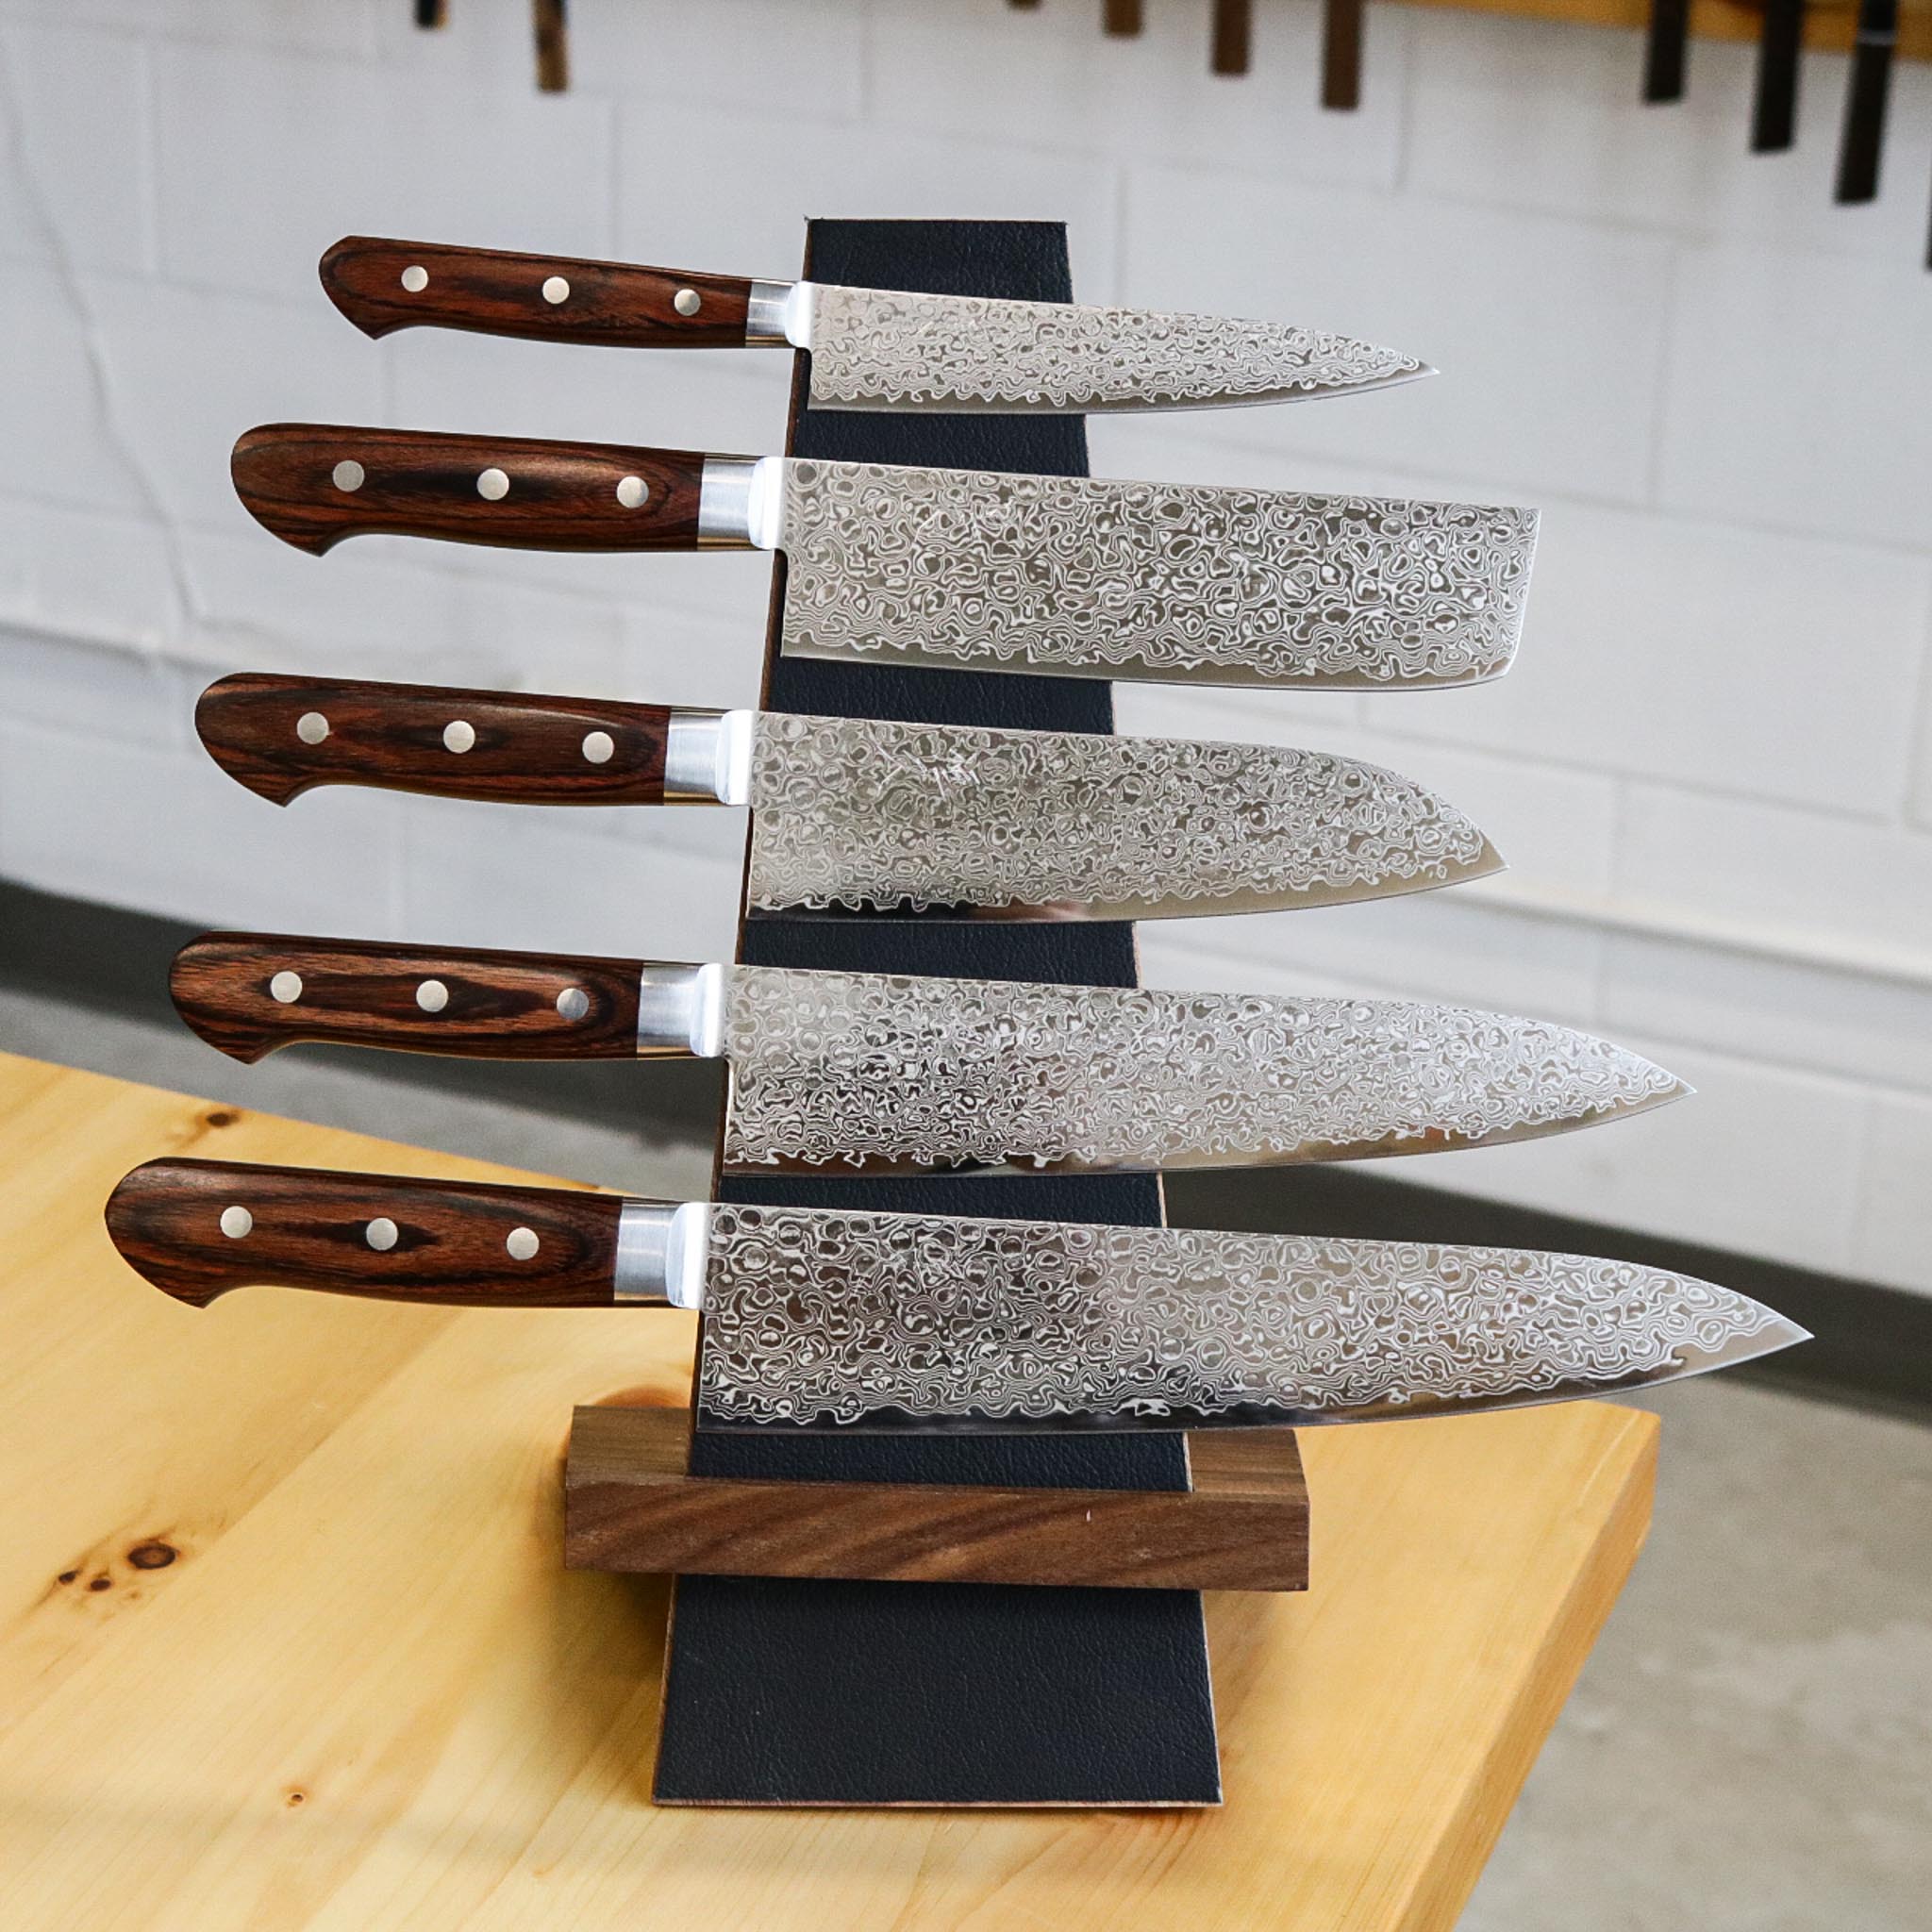 Tsunehisa ZA Damascus 5 knife Set + Leather Stand